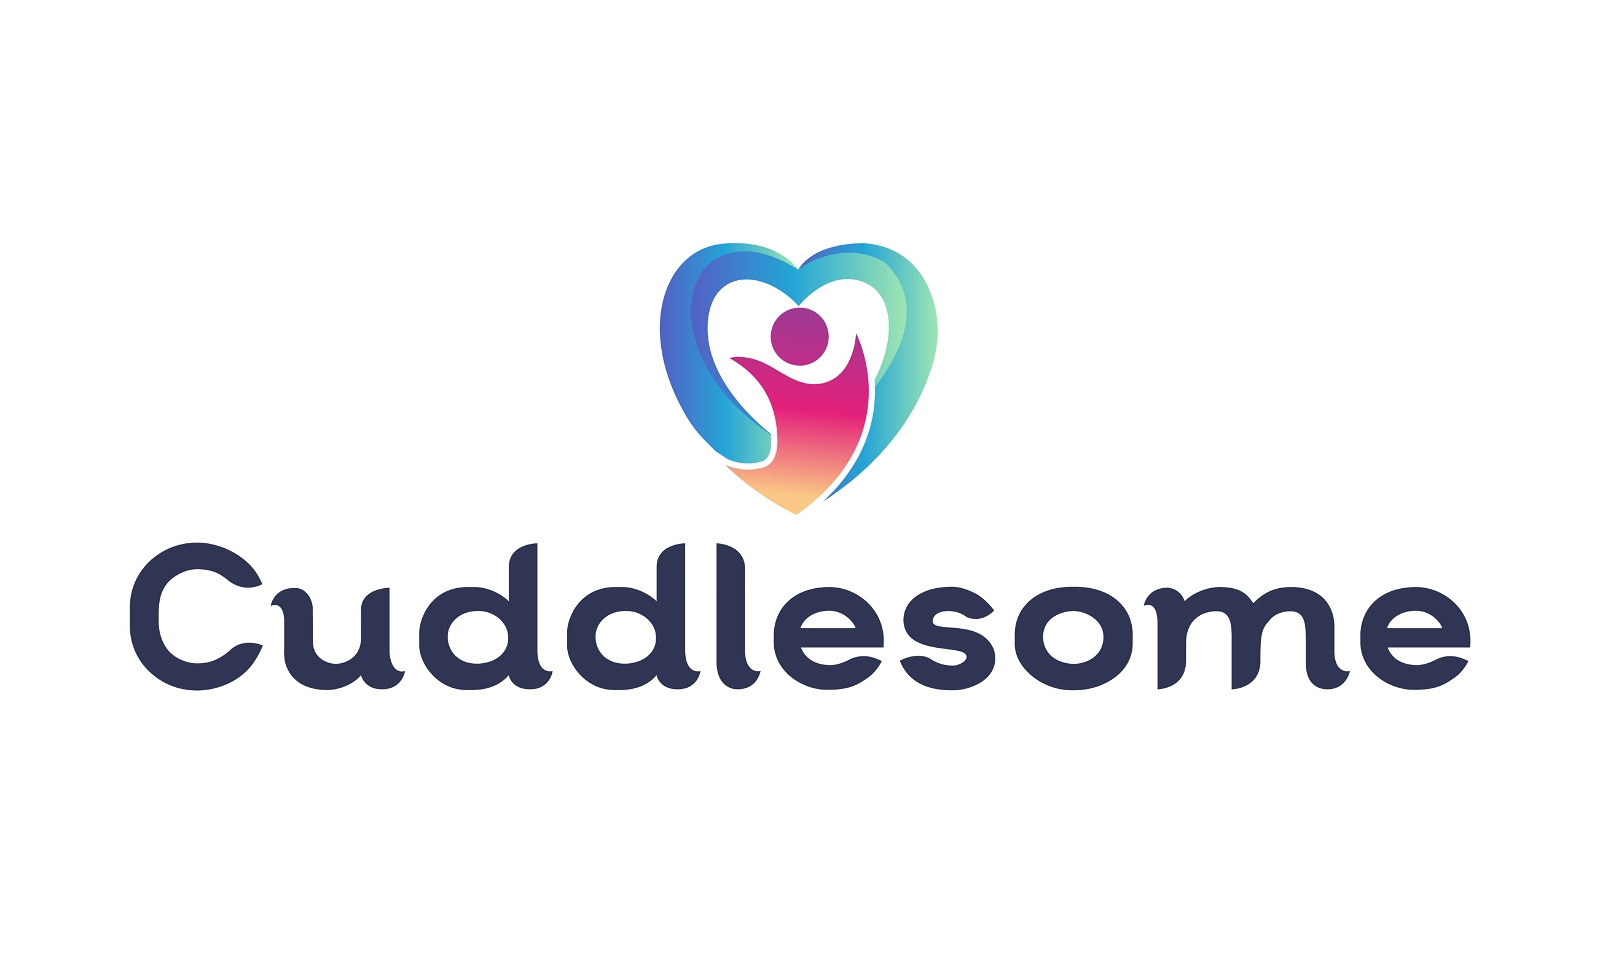 Cuddlesome.com - Creative brandable domain for sale